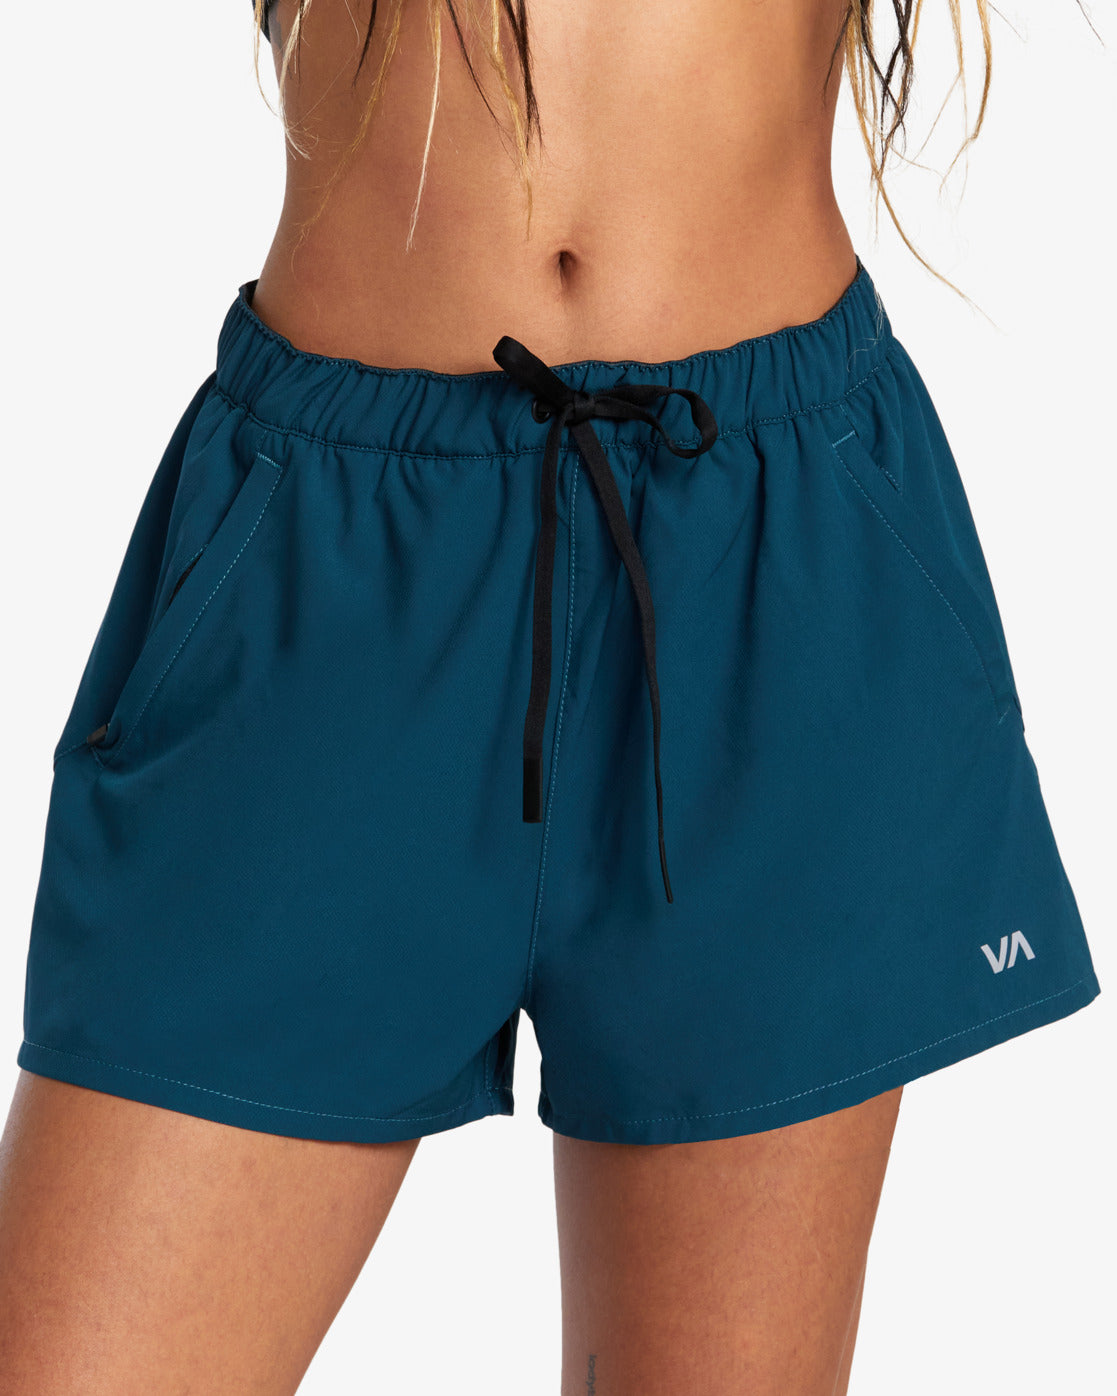 VA Sport Essential Yogger 12 - Performance Shorts für Frauen